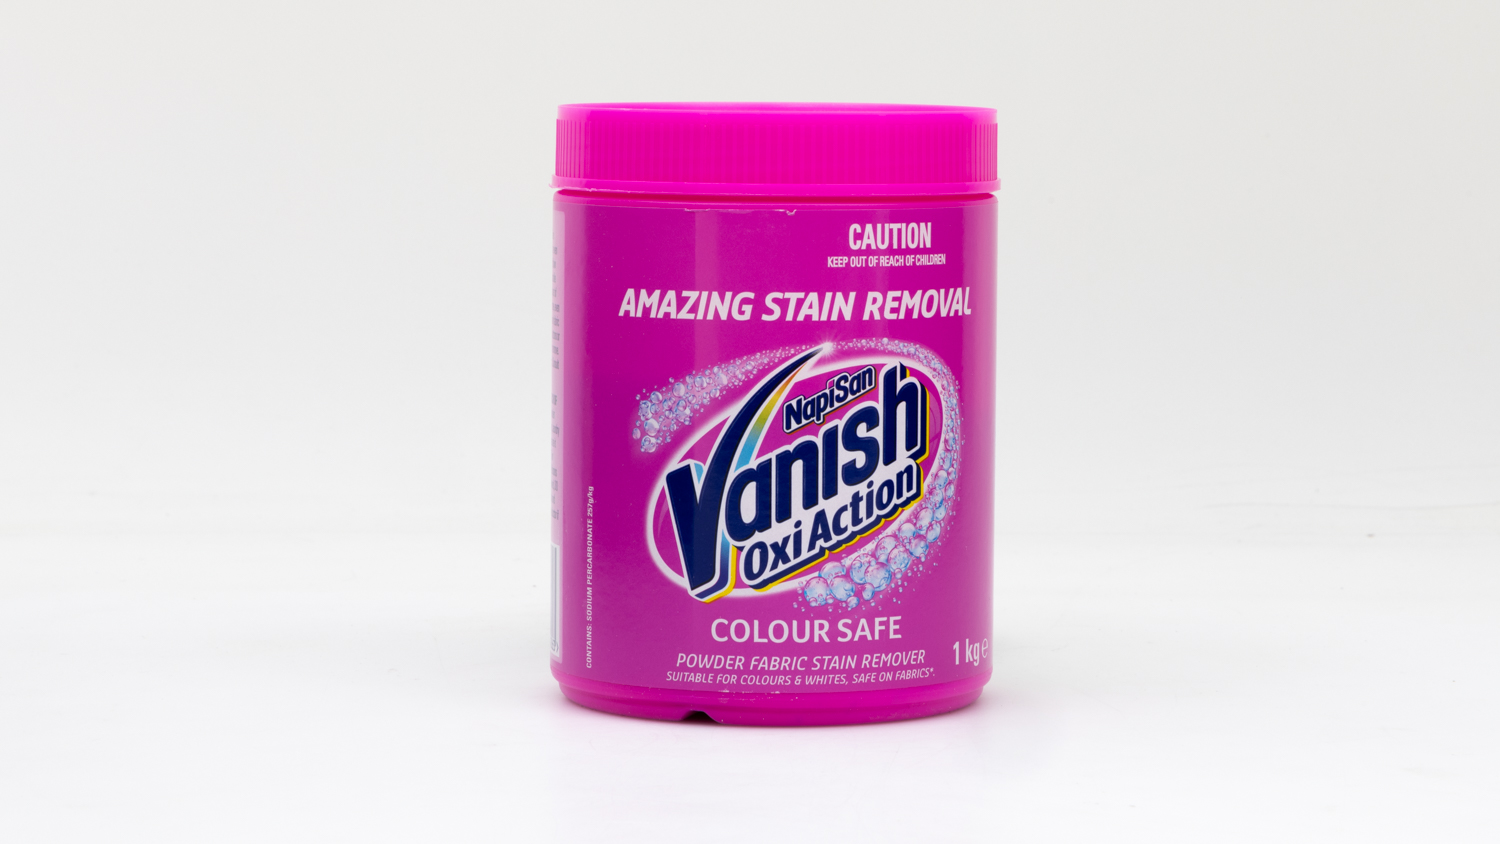 Vanish NapiSan Oxi Action Colour Safe Powder Fabric Stain Remover carousel image